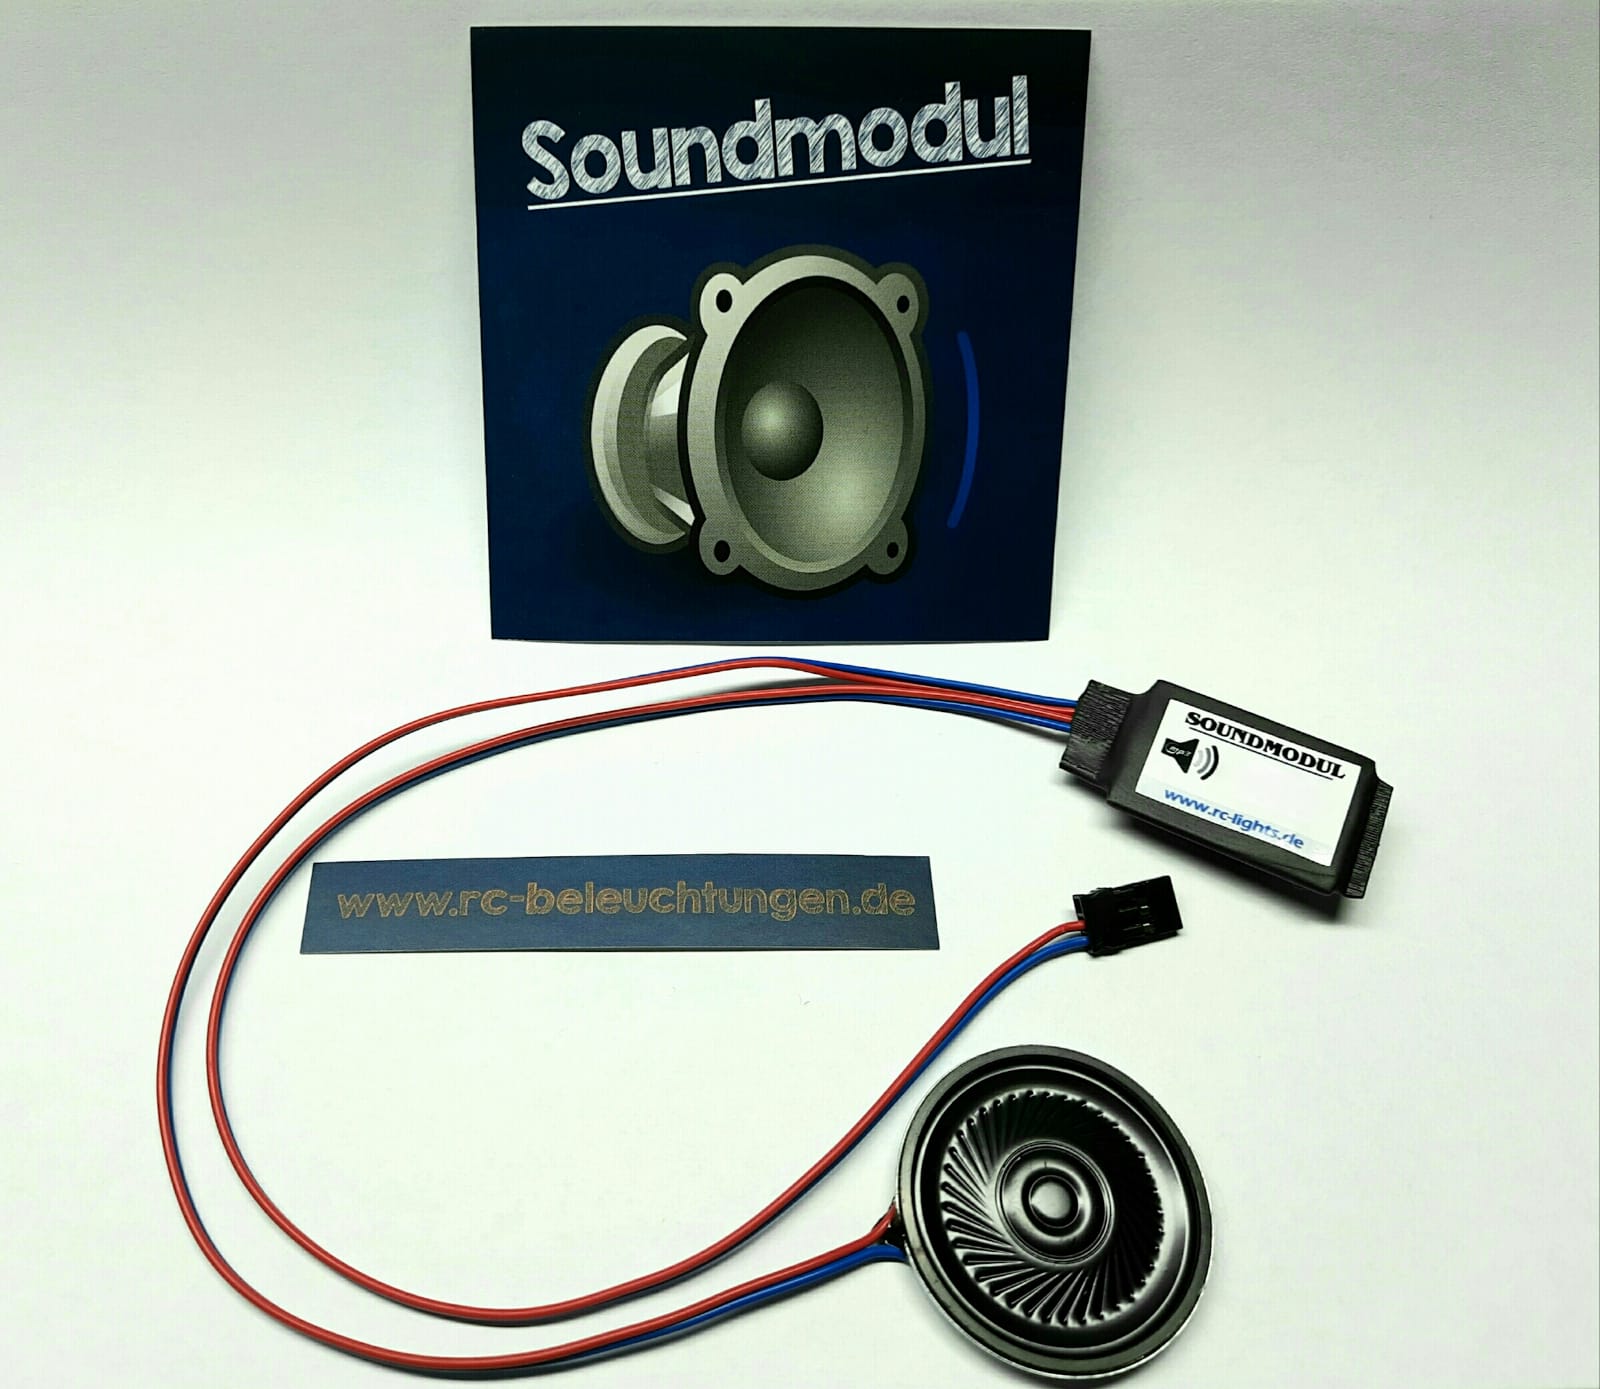  Beleuchtung RC Car - LEDs & Zubehör Modellbau Sounds  Blitzlicht - RC Soundmodul Sound  MARTINSHORN  FEUERWEHR Geräusch